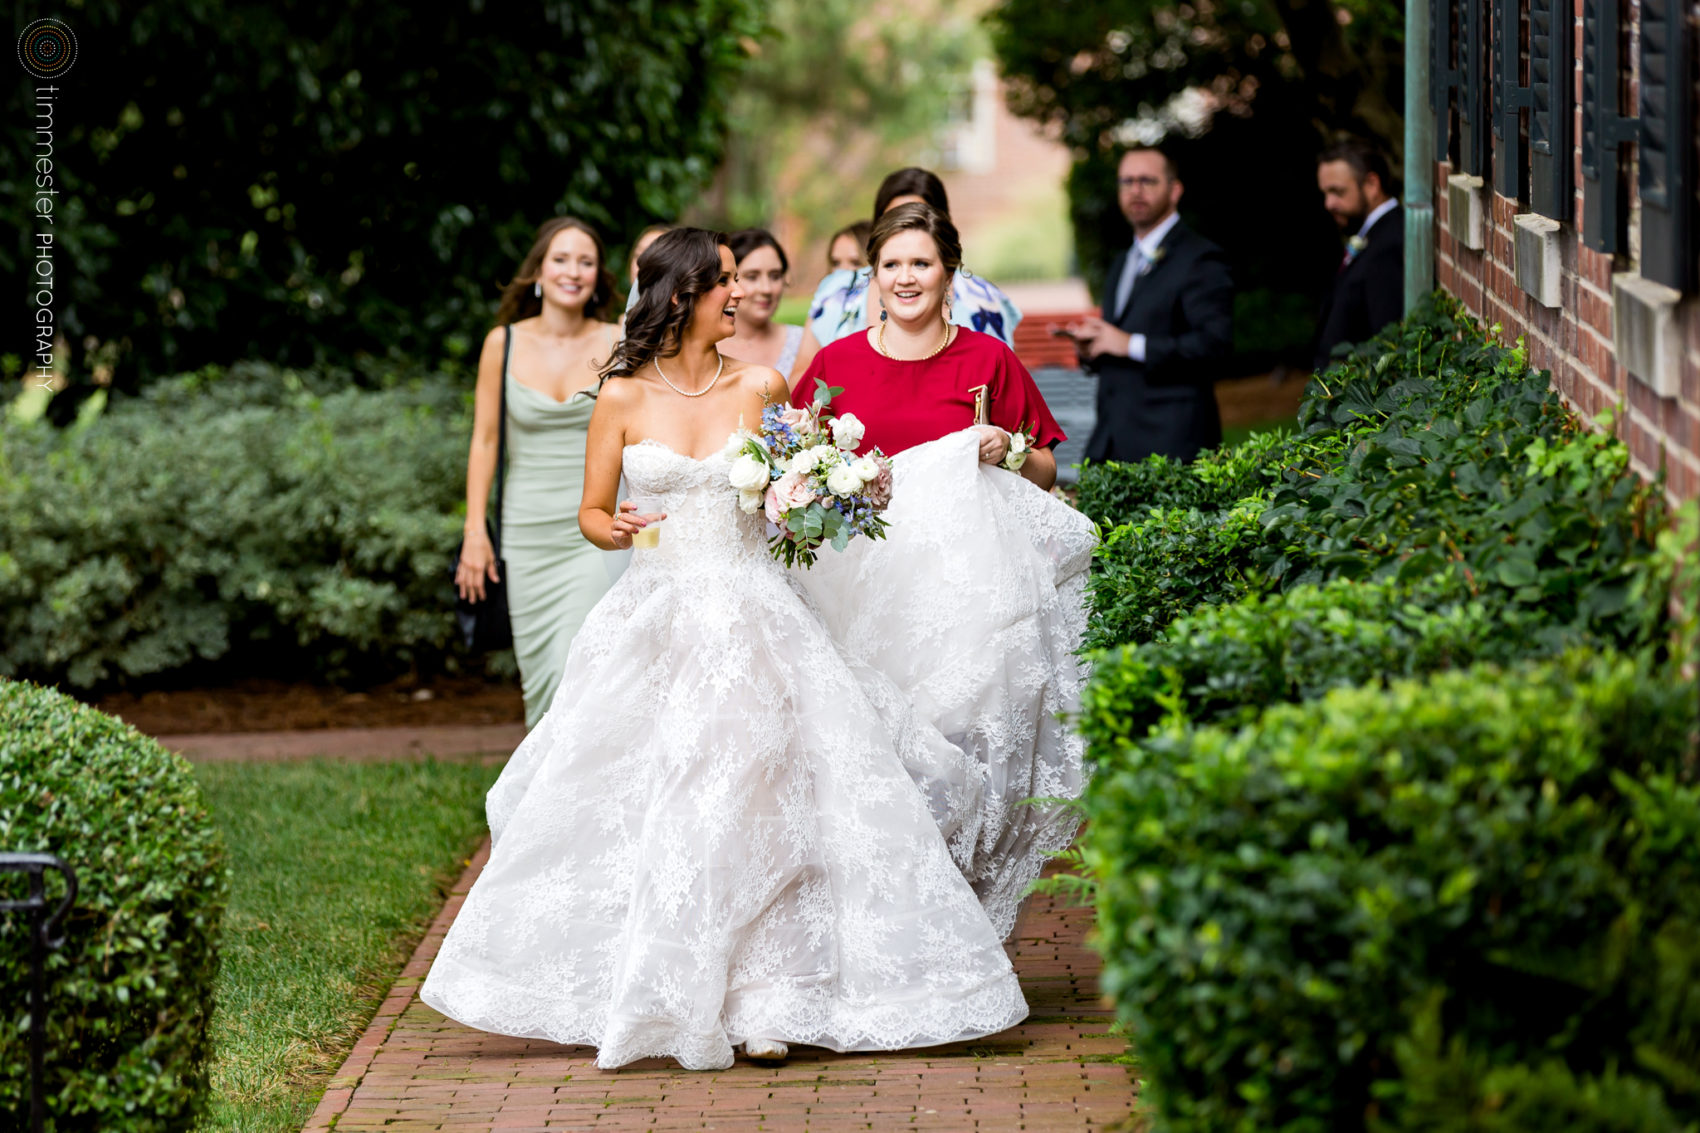 The Carolina Inn wedding day in Chapel Hill, North Carolina.